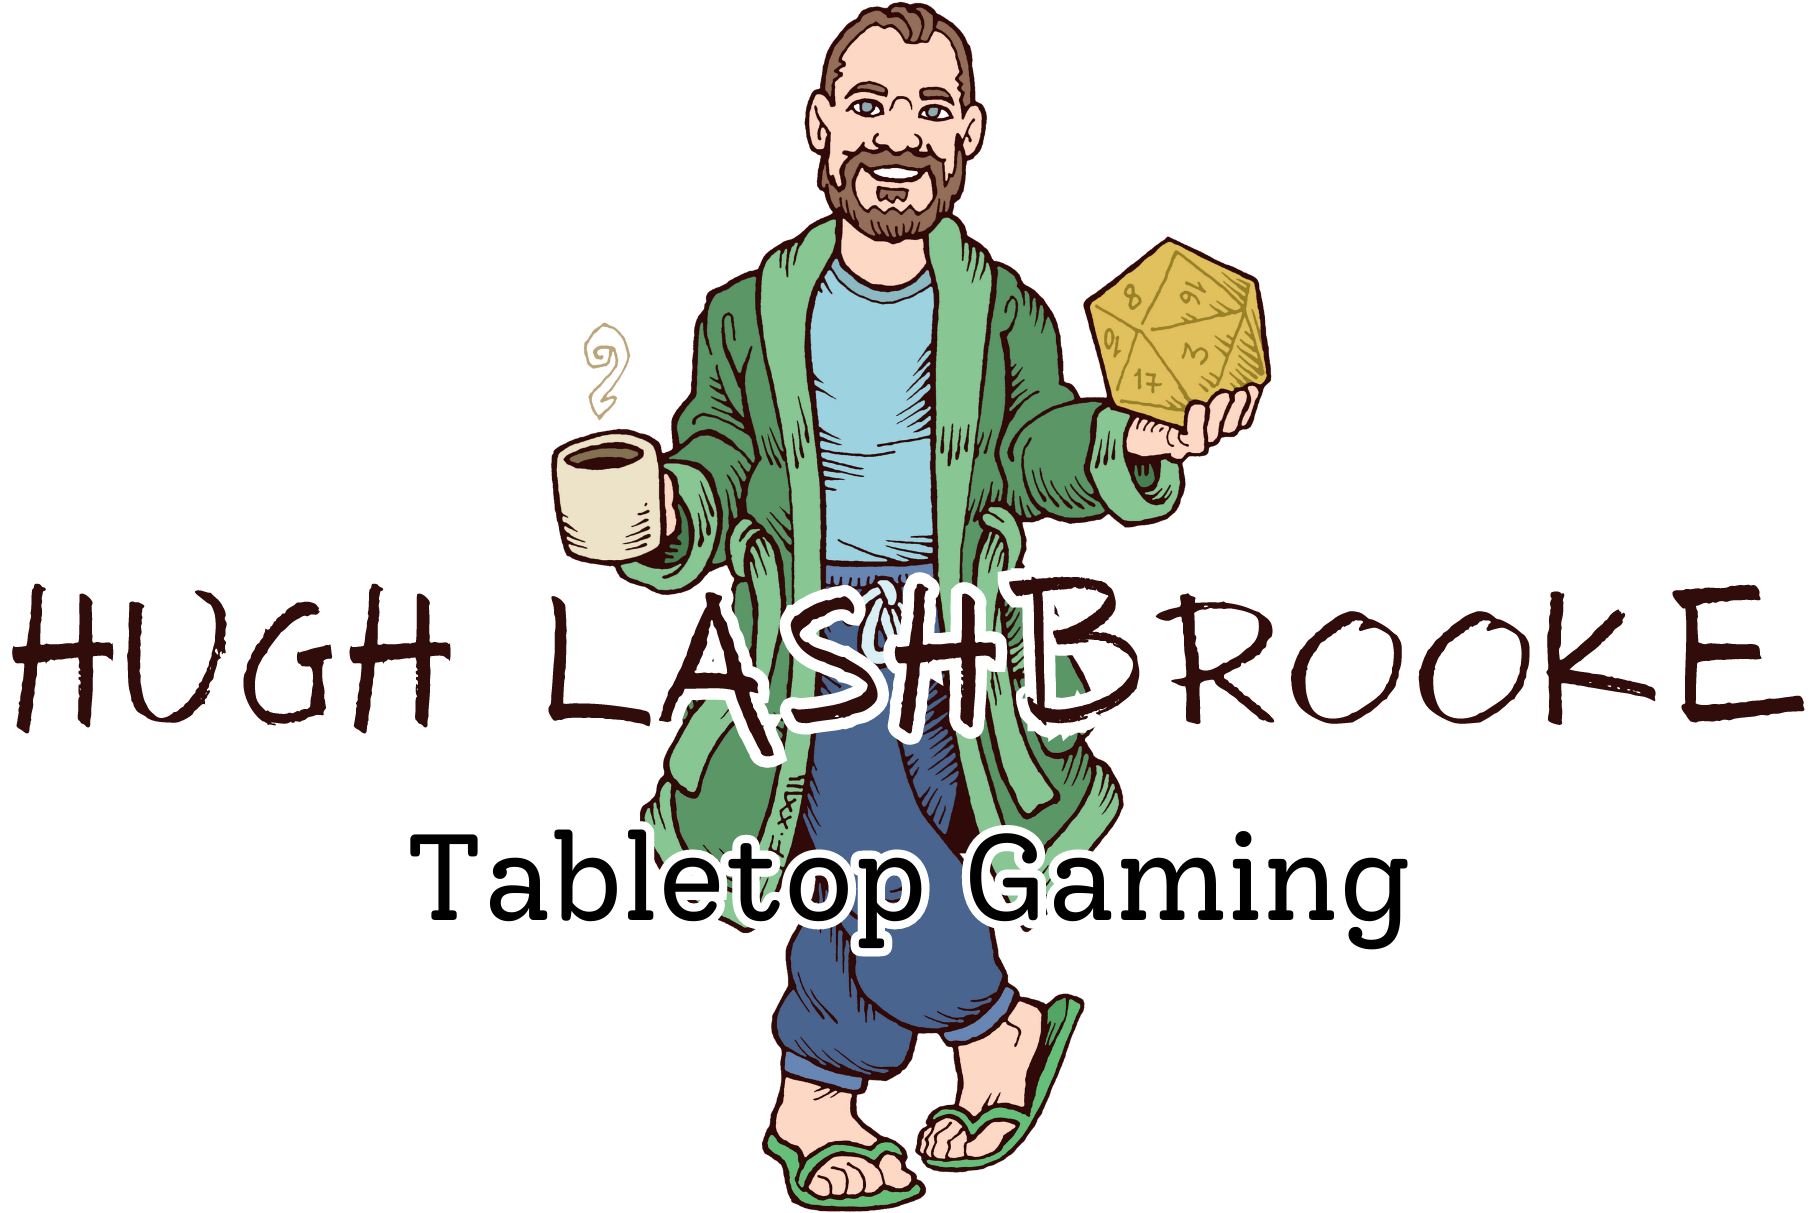 Hugh Lashbrooke - Tabletop Gaming